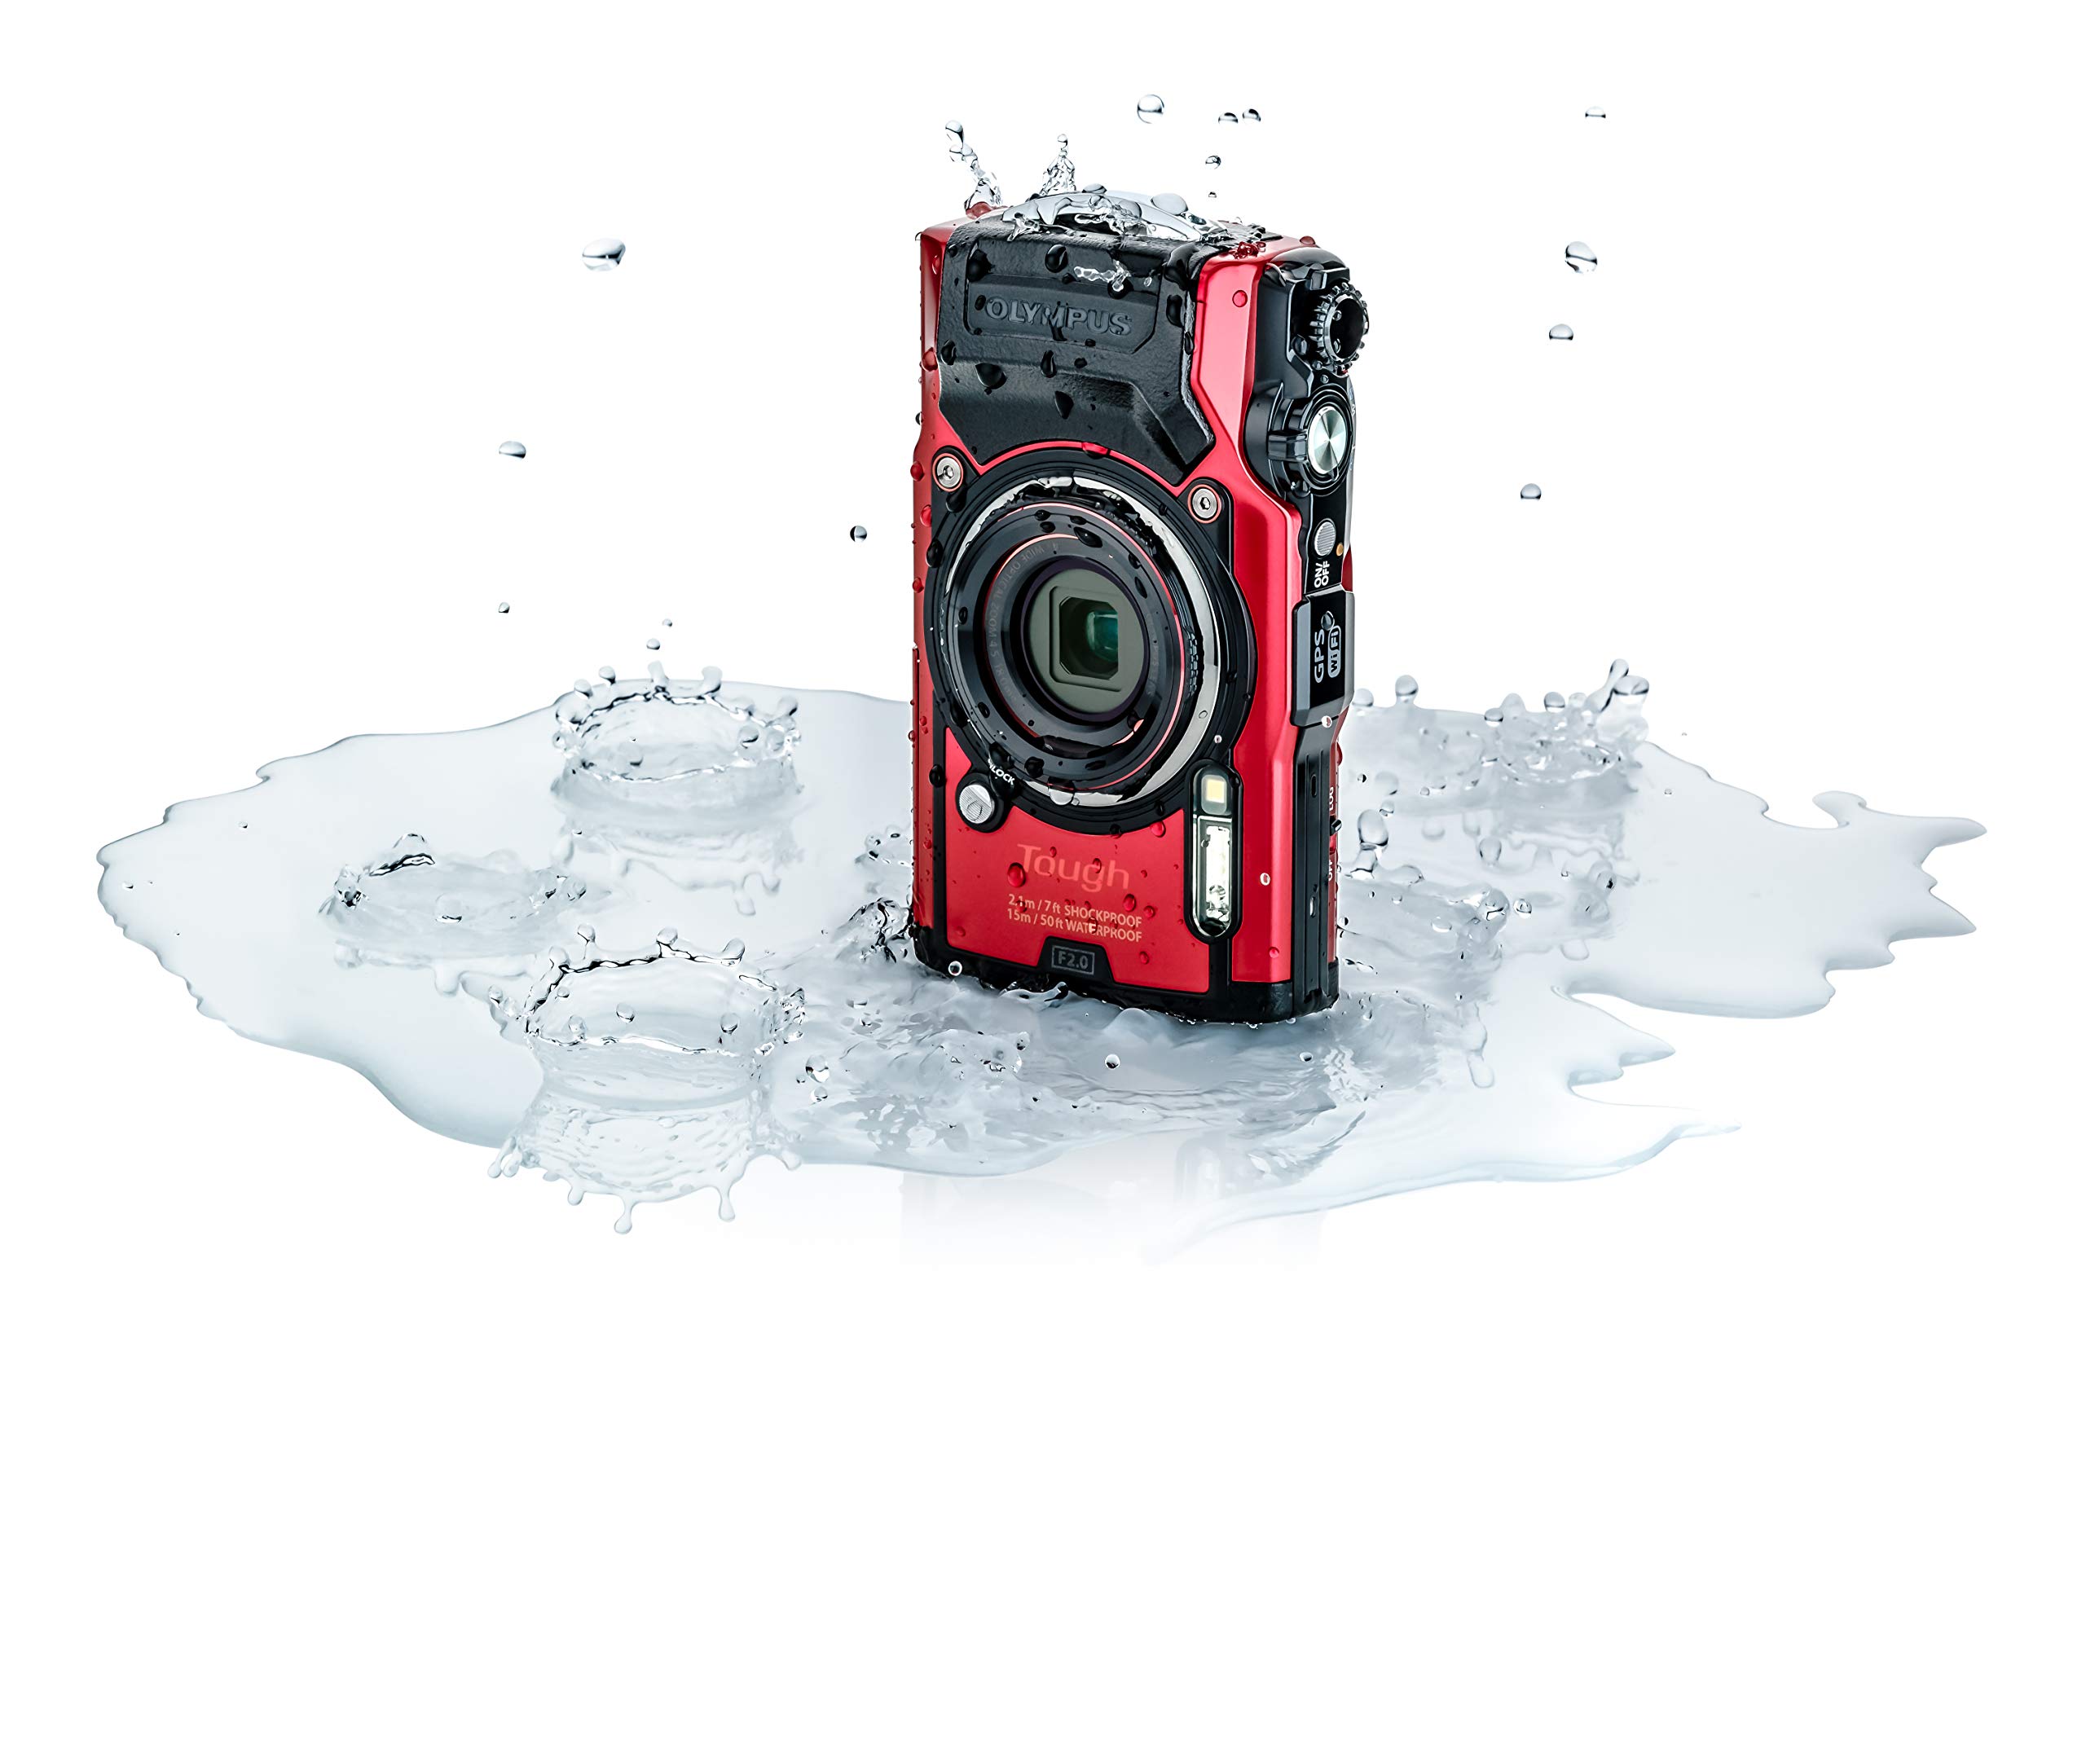 OM System Olympus TG-6 Red Underwater camera, Waterproof, Freeze proof, High Resolution Bright, 4K Video 44x Macro shooting